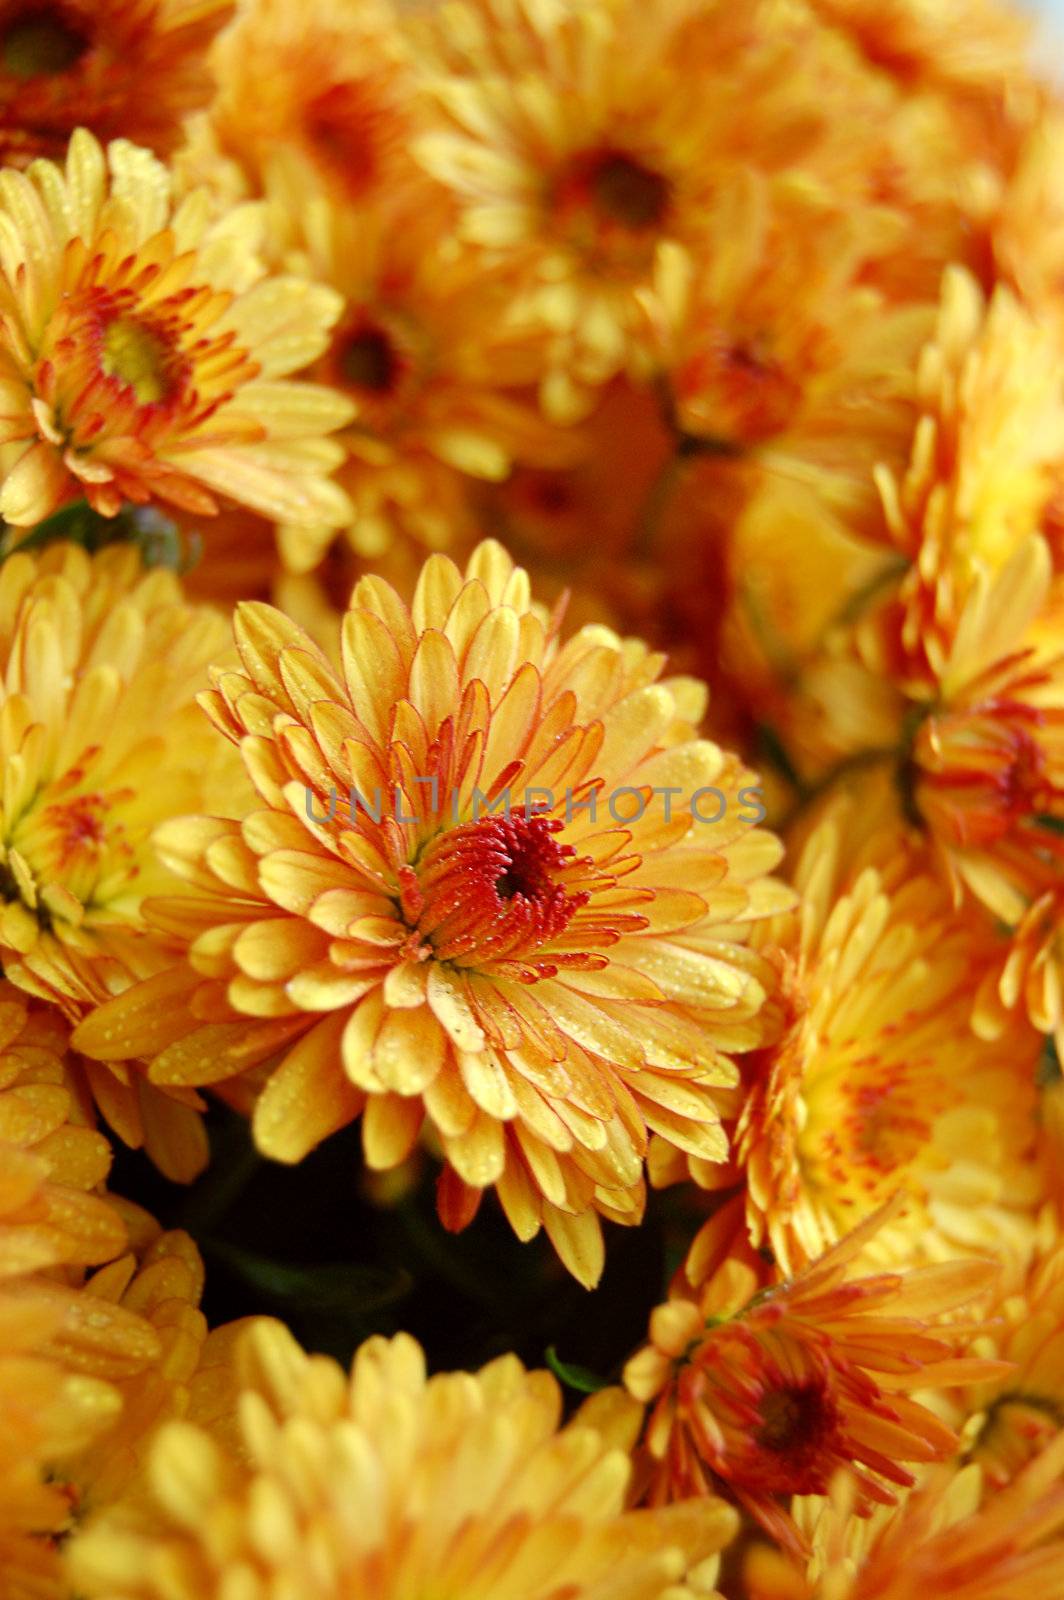 Orange chrysanthemum by Angel_a